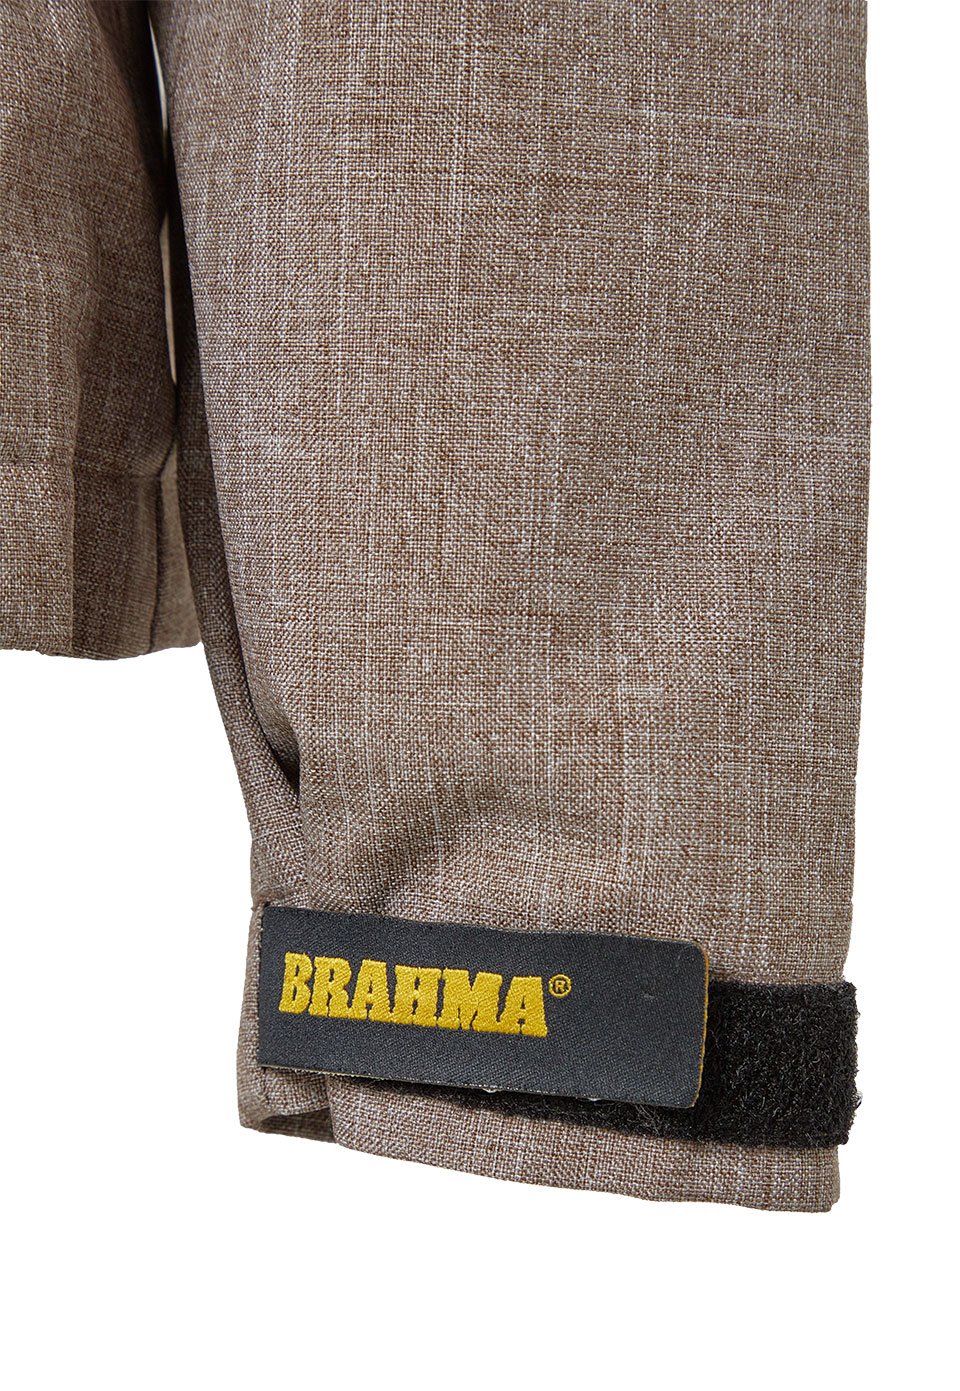 Brahma - Página Oficial - CHQ0059-NEG Chaqueta Larga Abierta Mujer